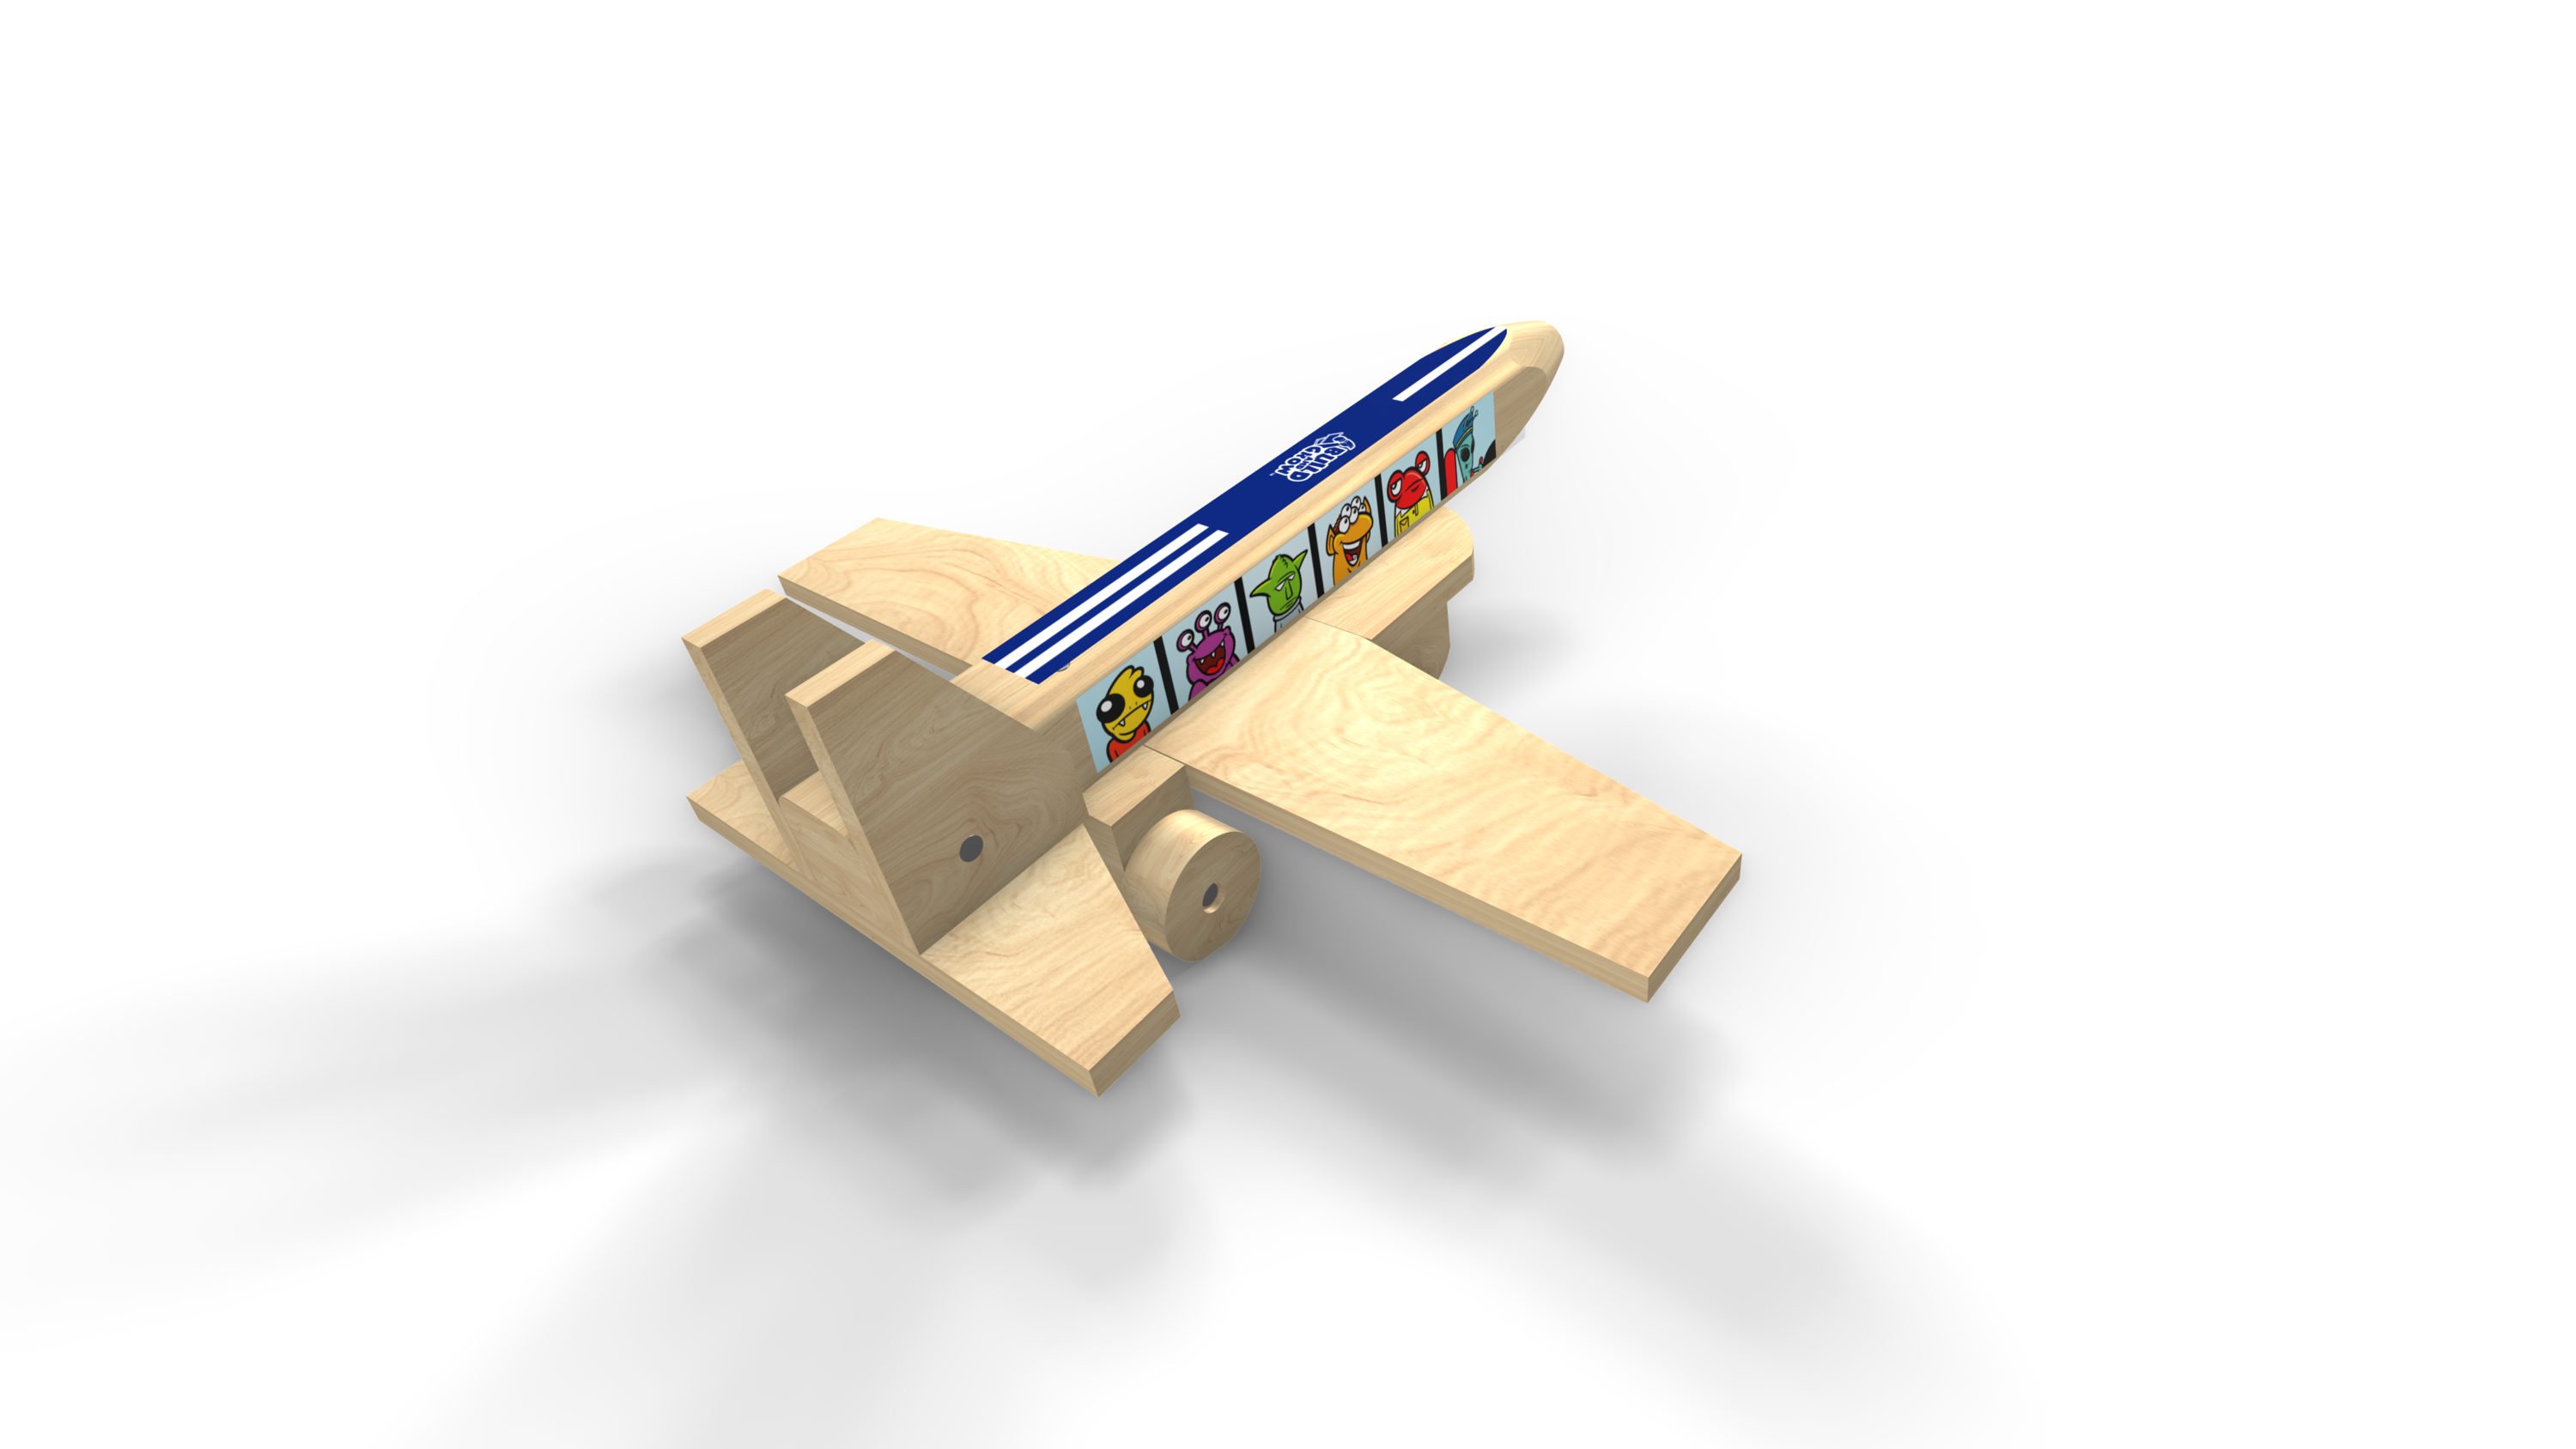 Details about   Gladiator Model Plane wooden build kit for kids by kids 